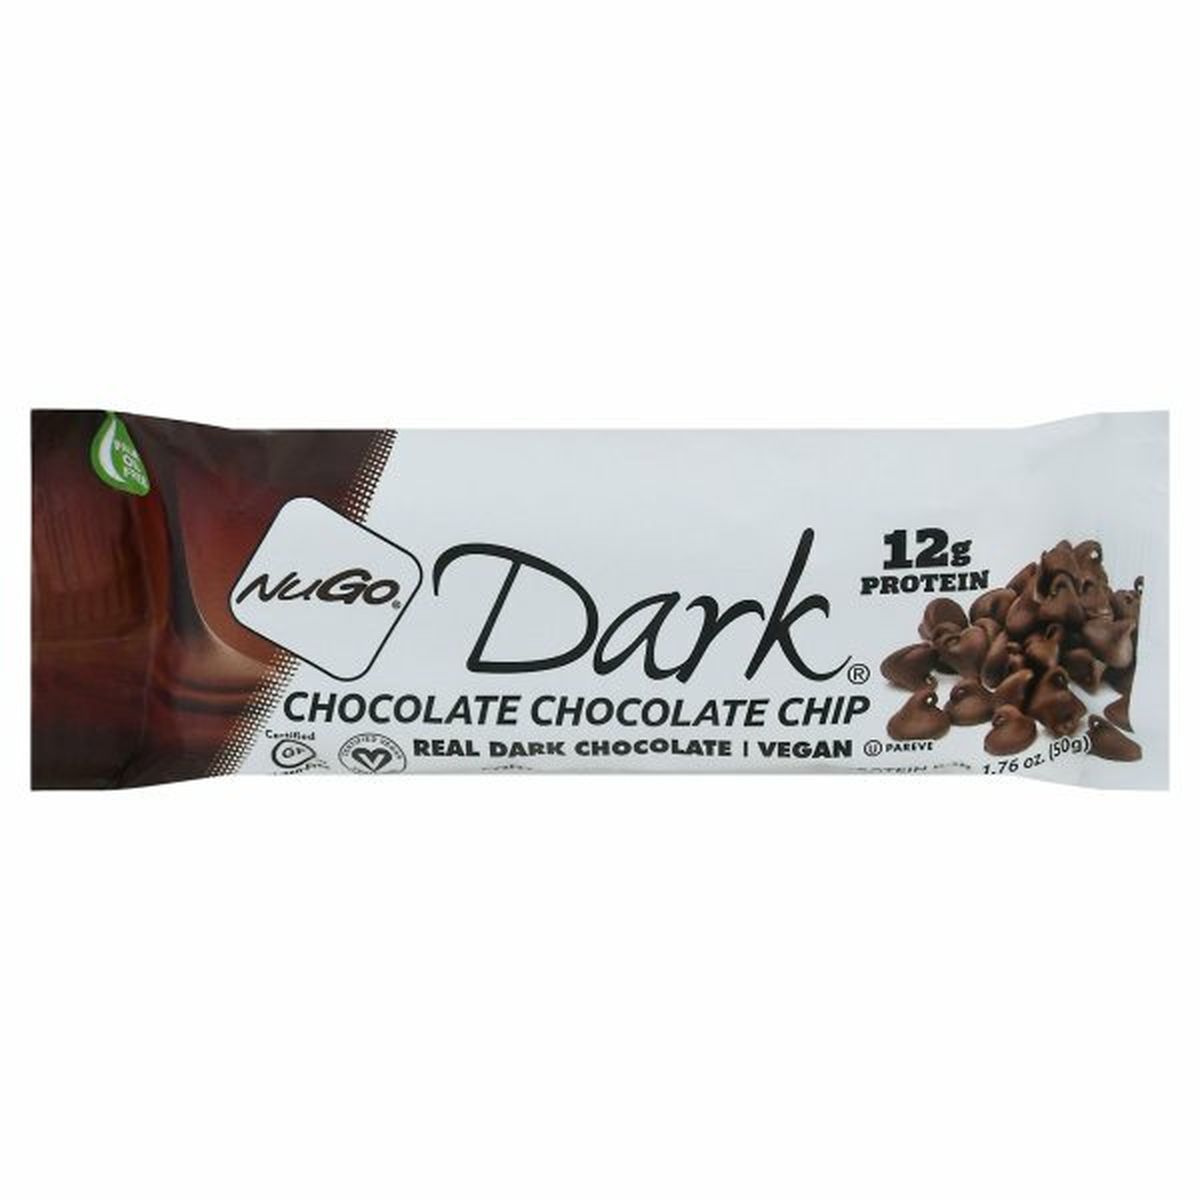 Calories in NuGo Dark Protein Bar, Chocolate Chocolate Chip